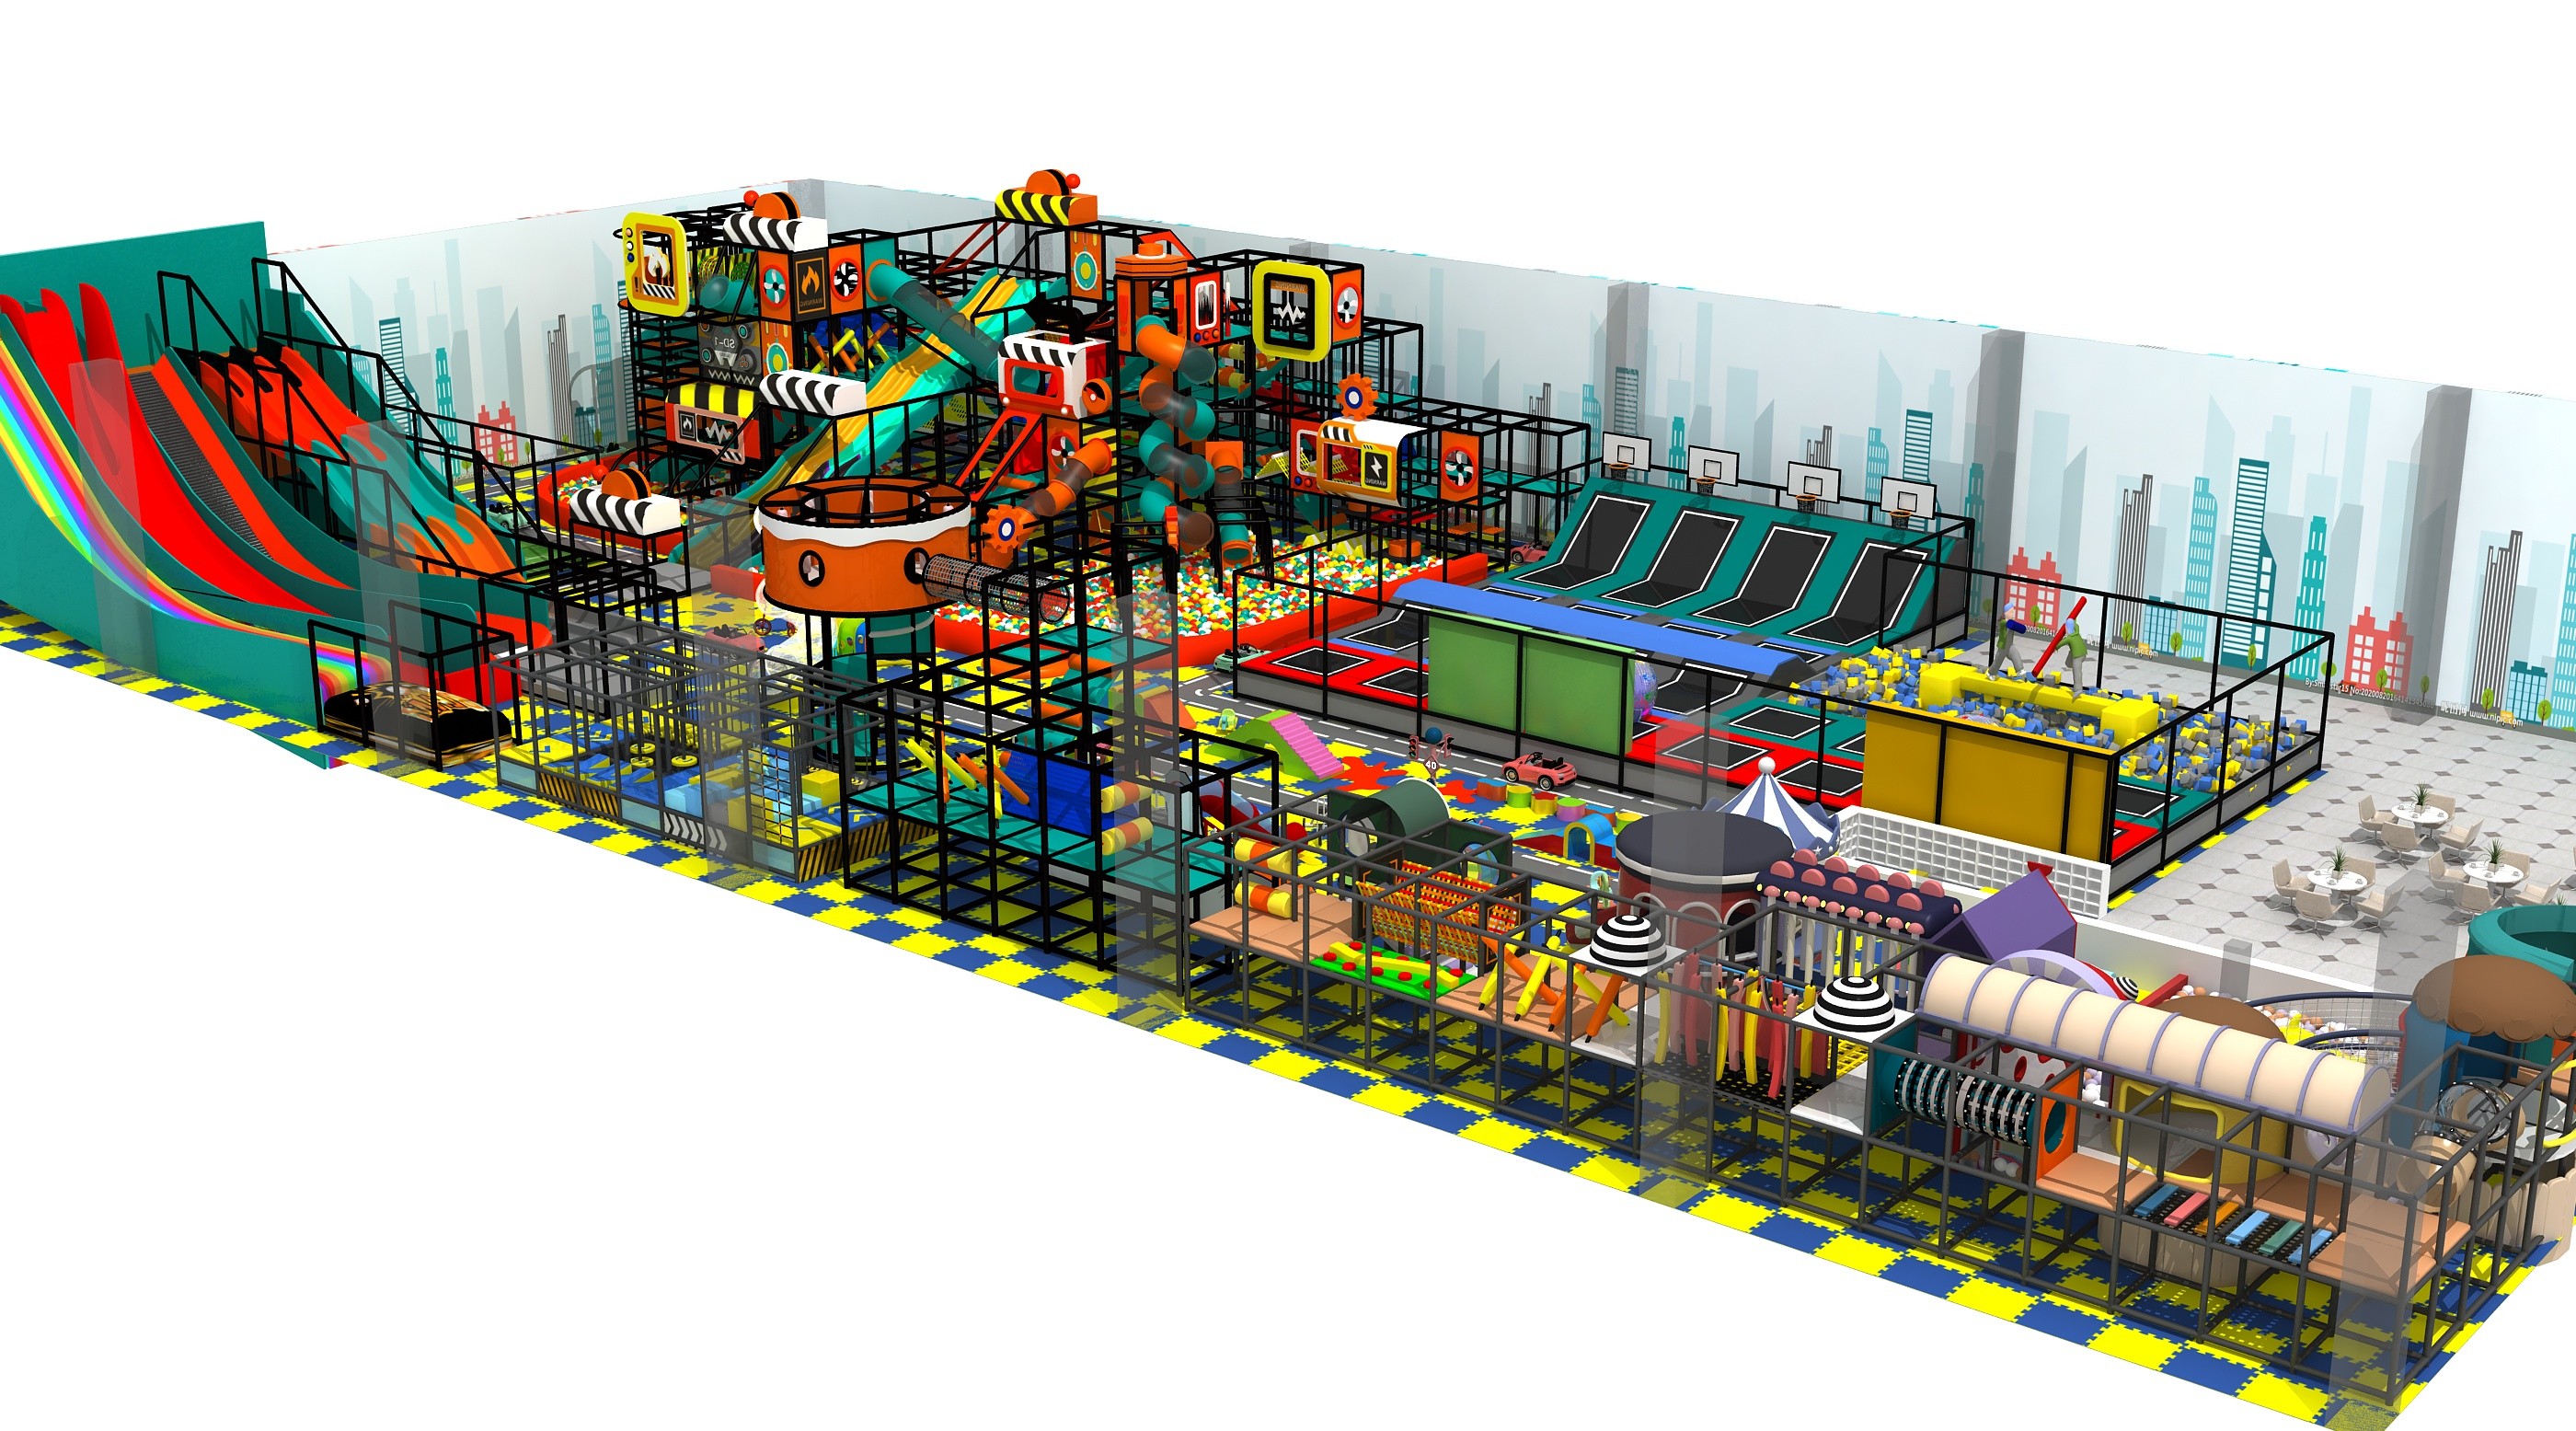 How to choose indoor children's playground amusement equipment to save money?